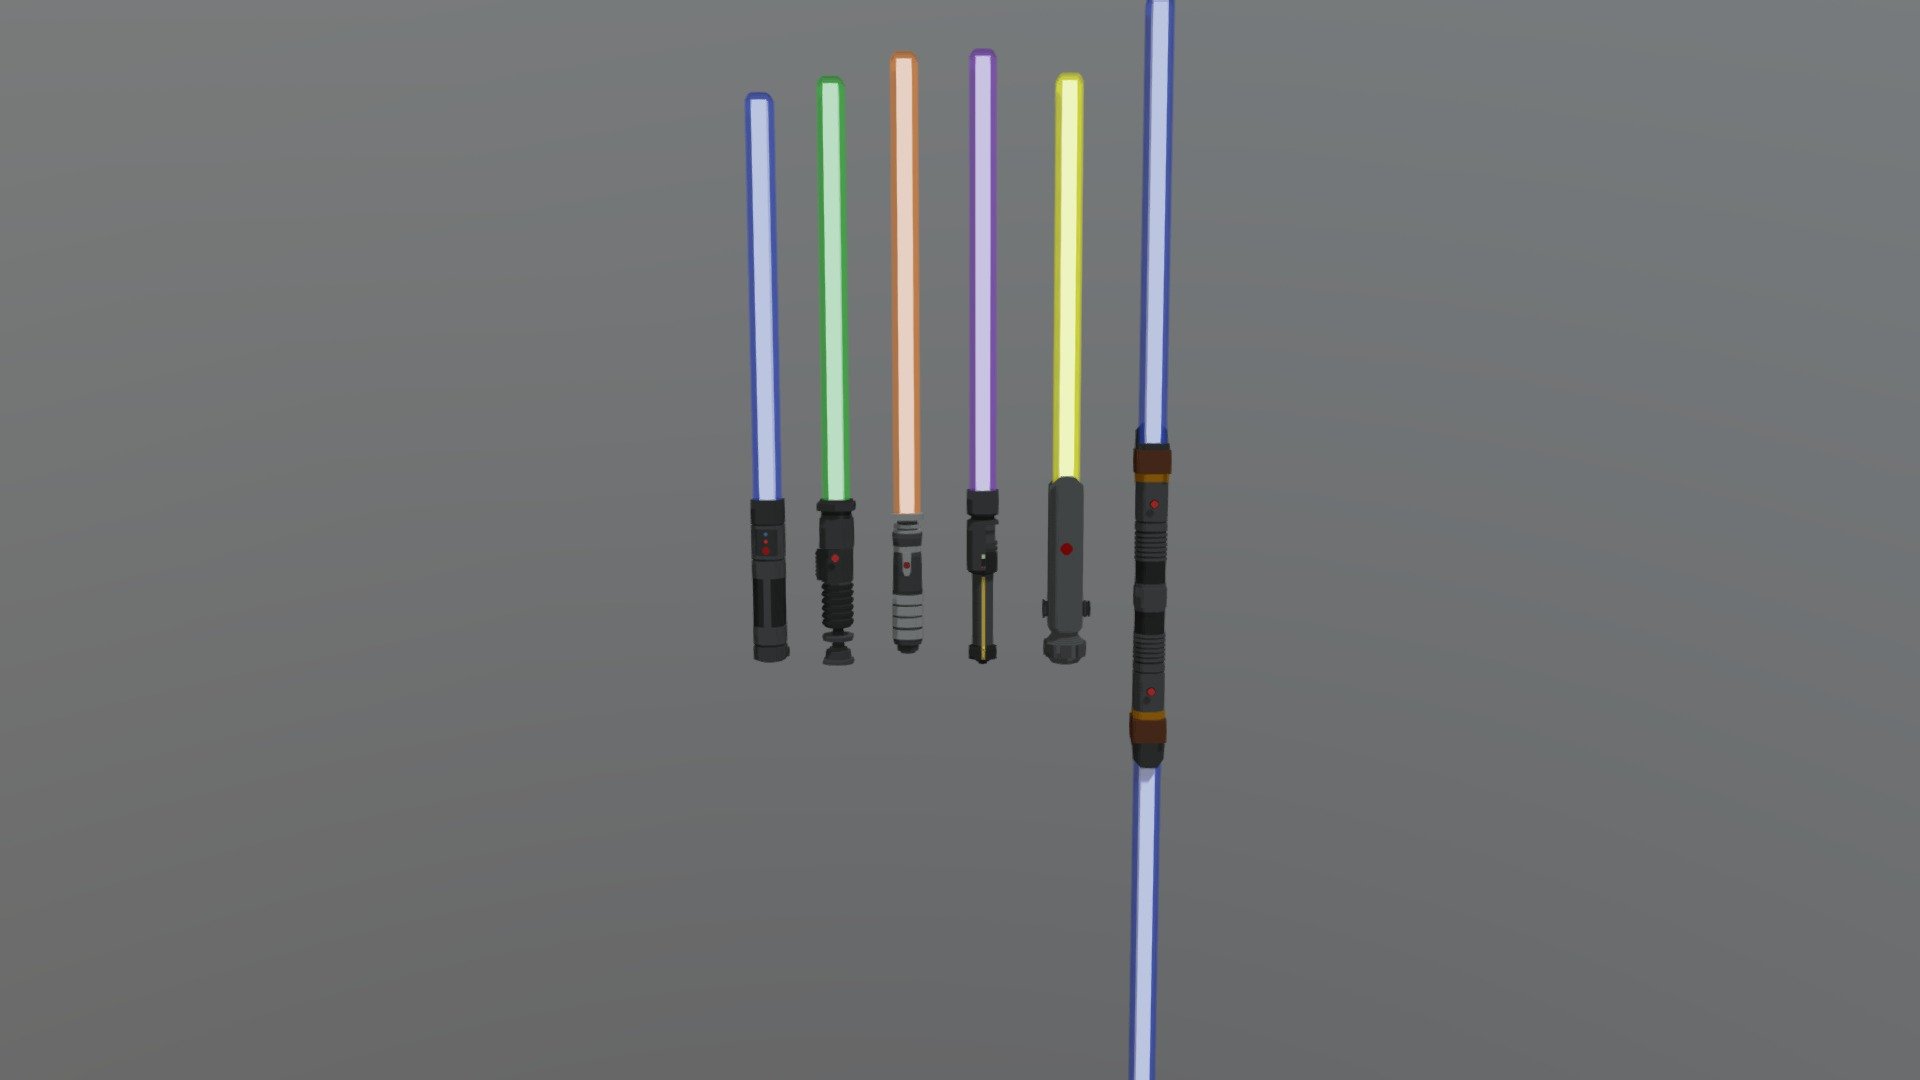 Jedi's lightsabers